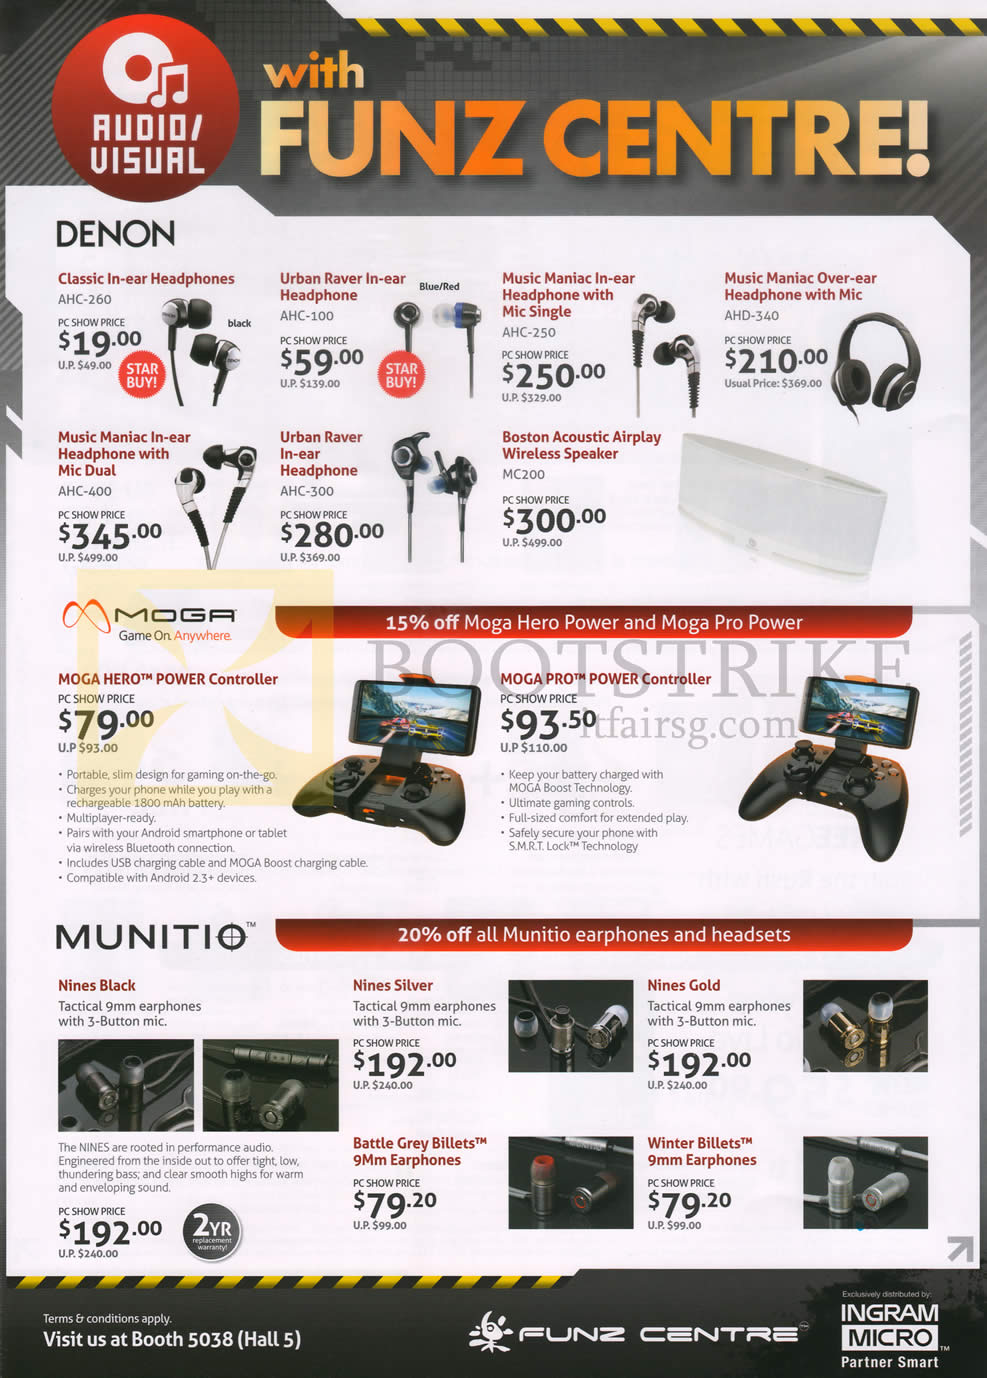 PC SHOW 2014 price list image brochure of Funz Centre Denon, Moga, Munito, Headphones, Earphones, Power Controller, Headsets, AHC-260, 100, 250, 340, 400, 300, MC200, Nines